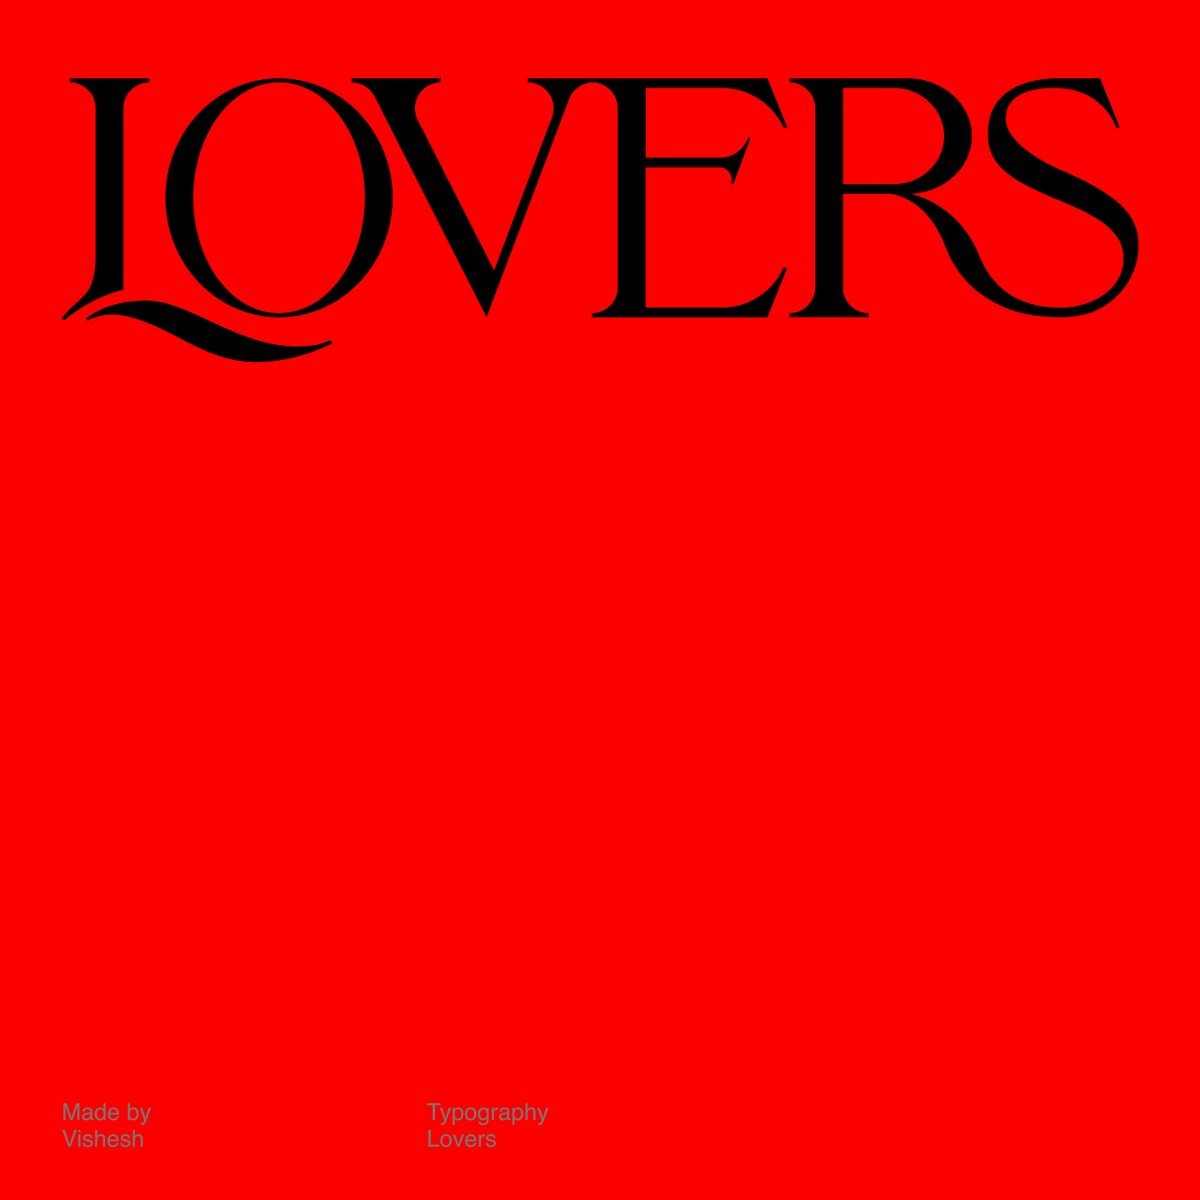 Lovers - Typography